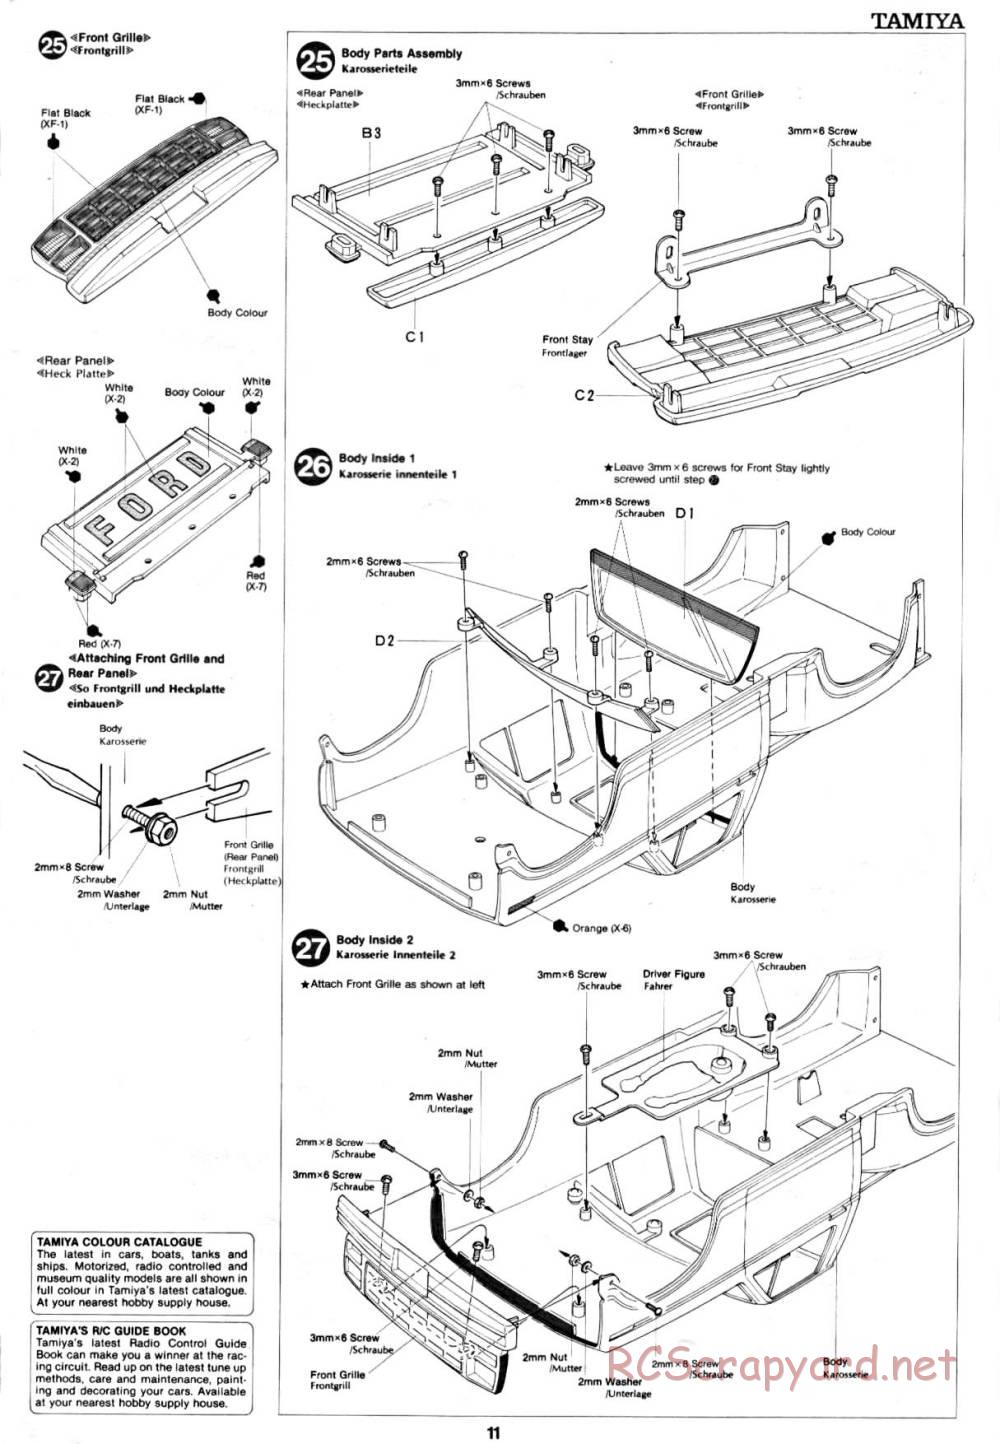 Tamiya - Ford F-150 Ranger XLT - 58027 - Manual - Page 11